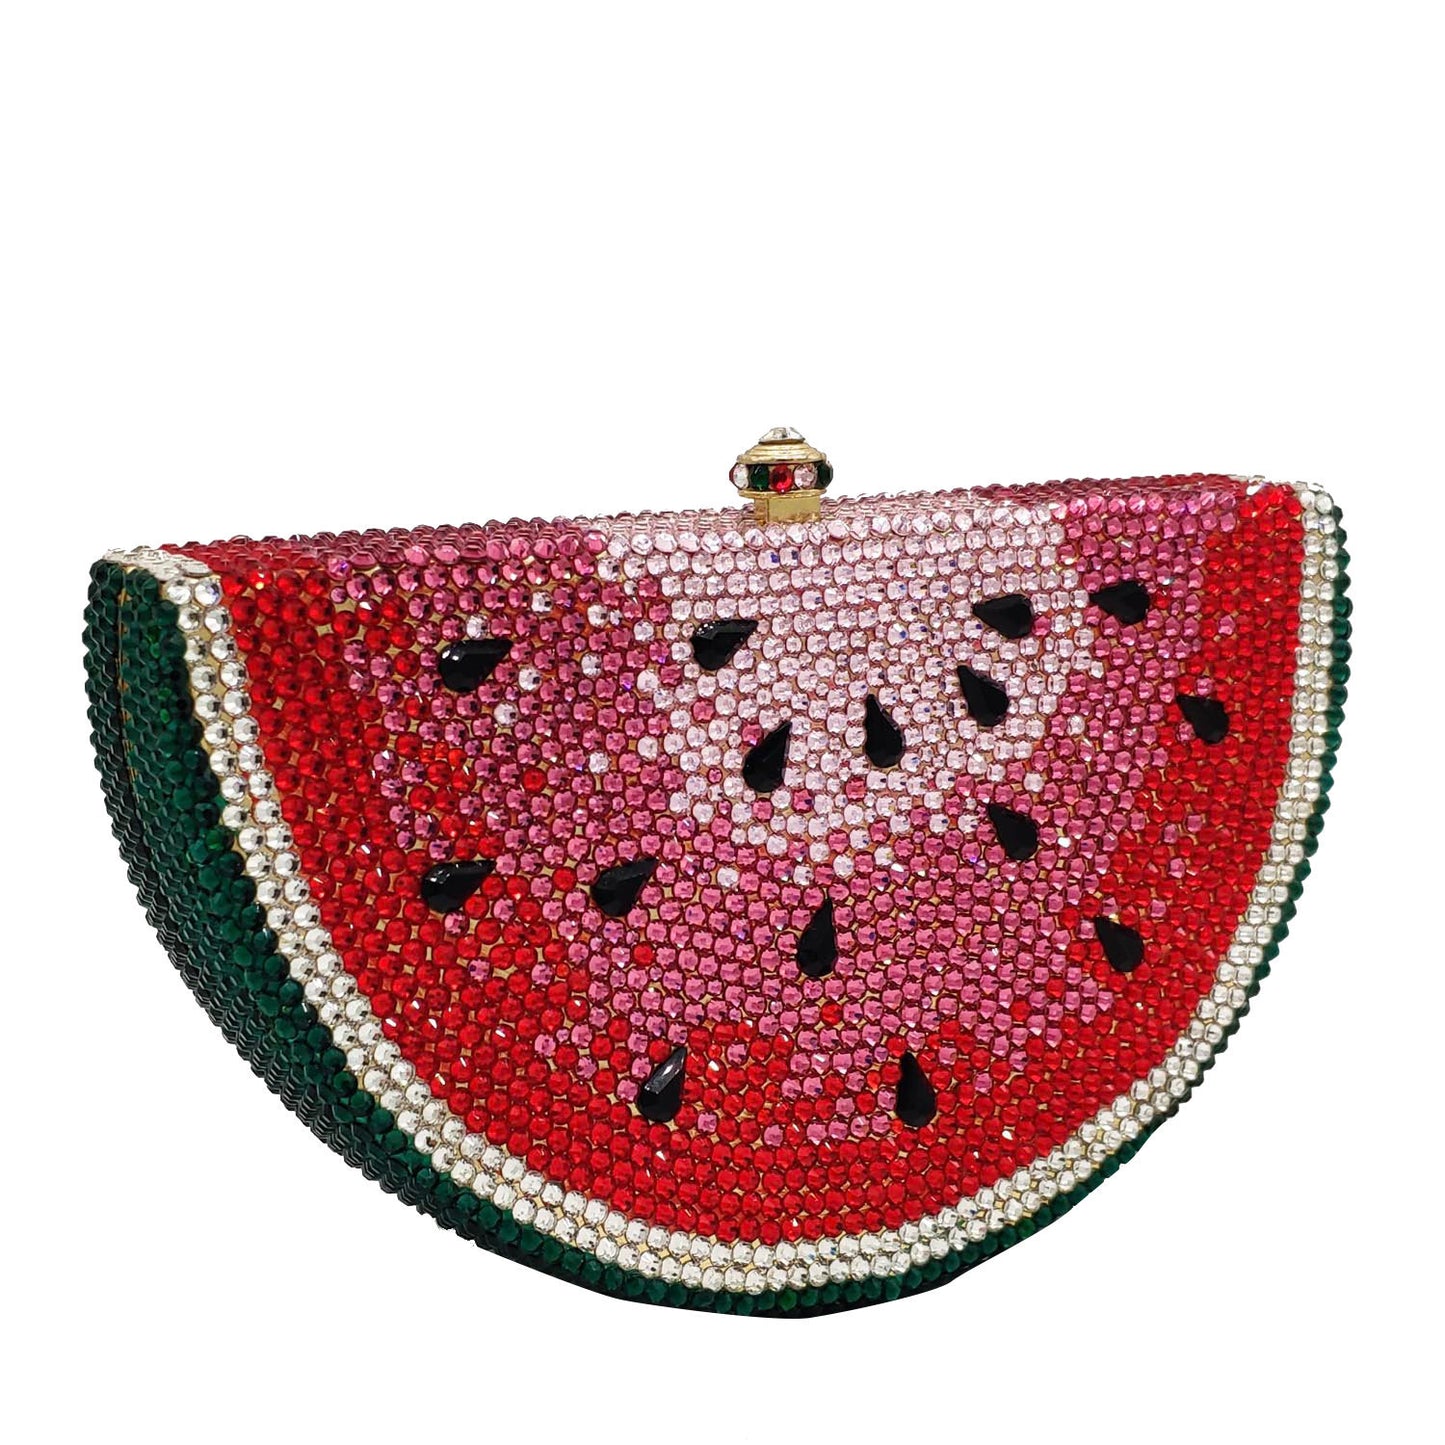 Watermelon Premium Crystal Clutch